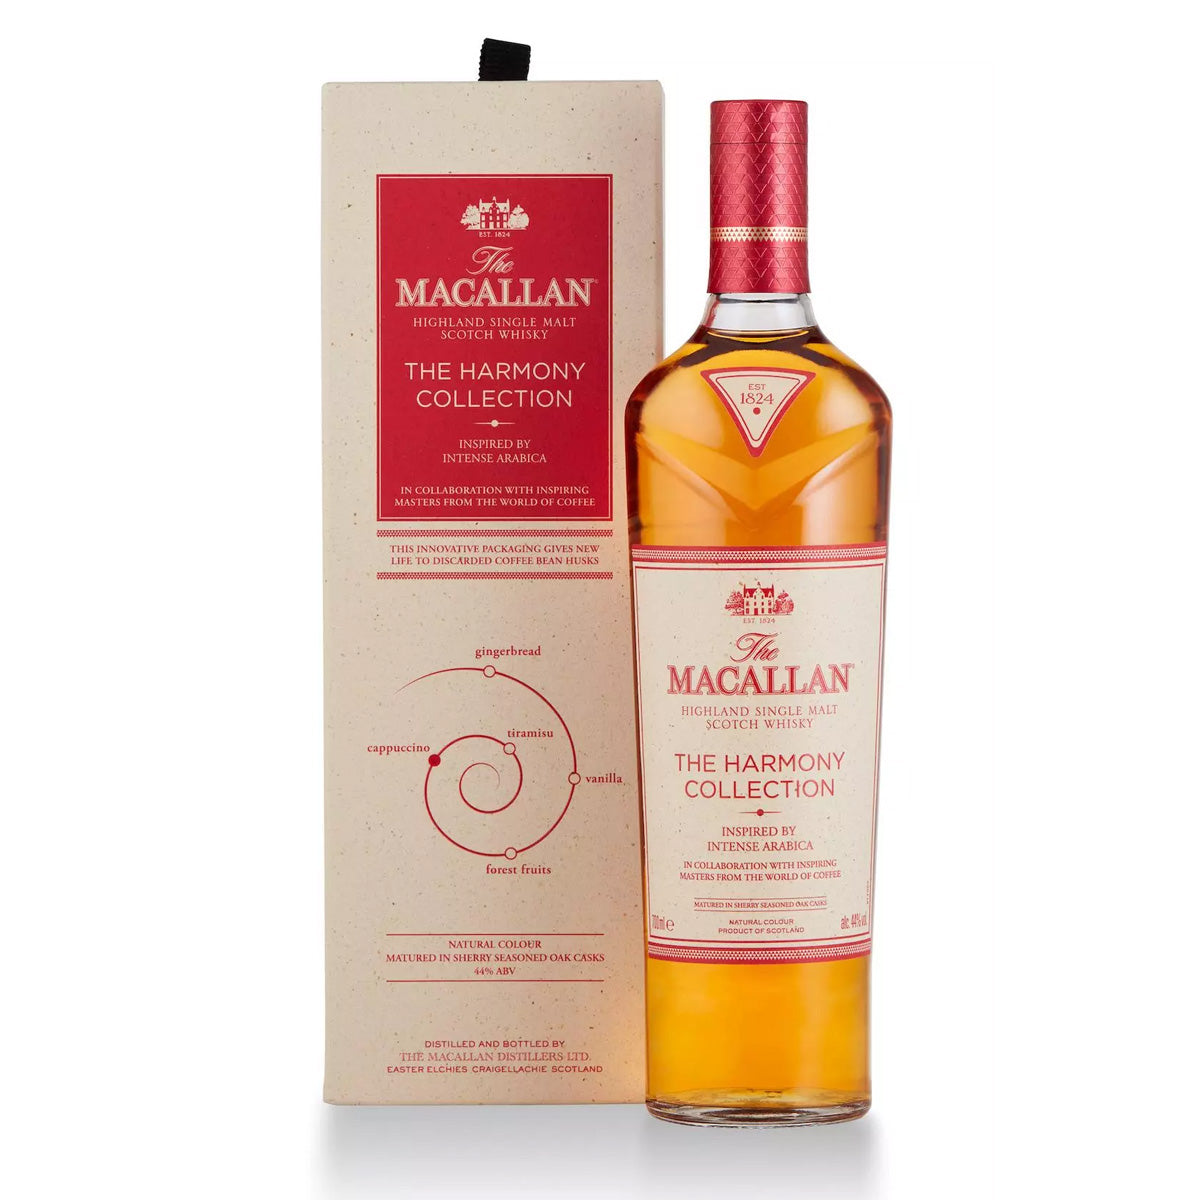 Macallan The Harmony Collection 2nd Edition (Intense Arabica) Single Malt Scotch